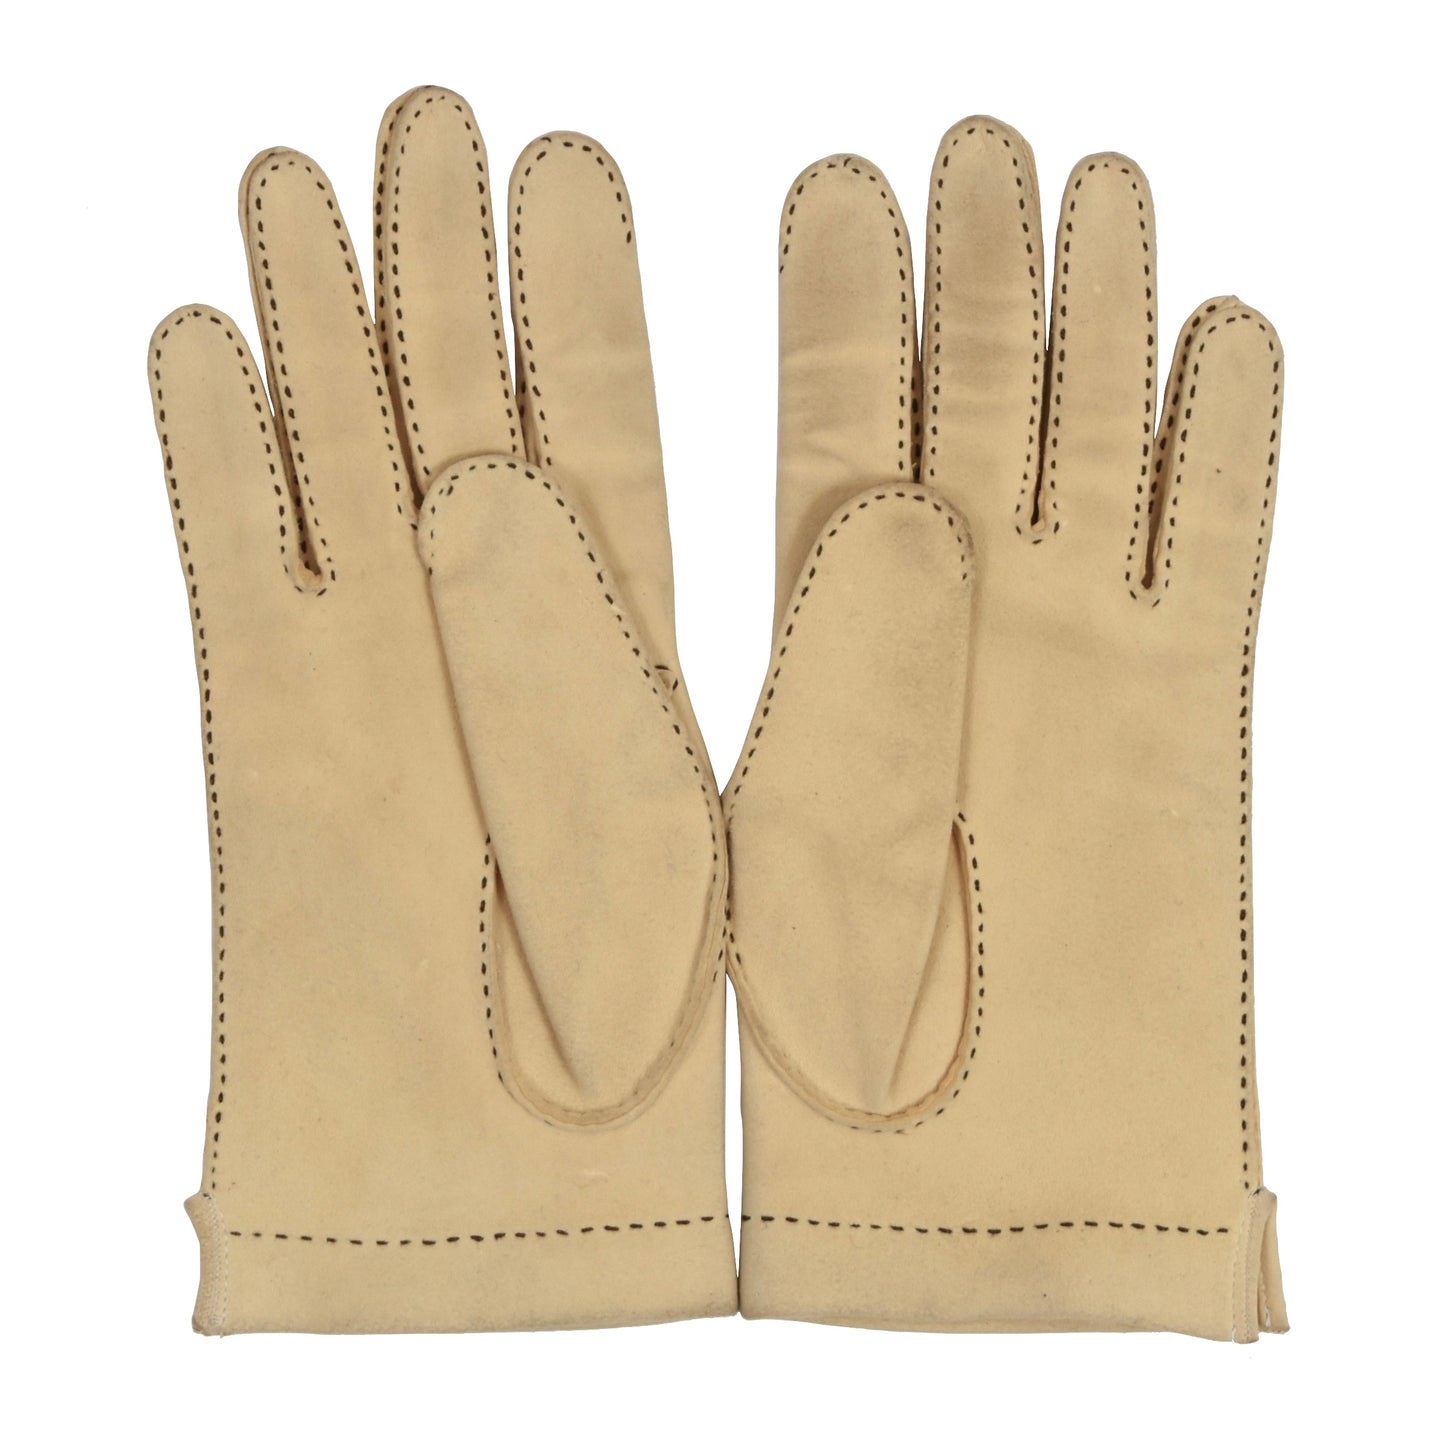 Doeskin Officer Leather Gloves Unlined - Natural/Butter